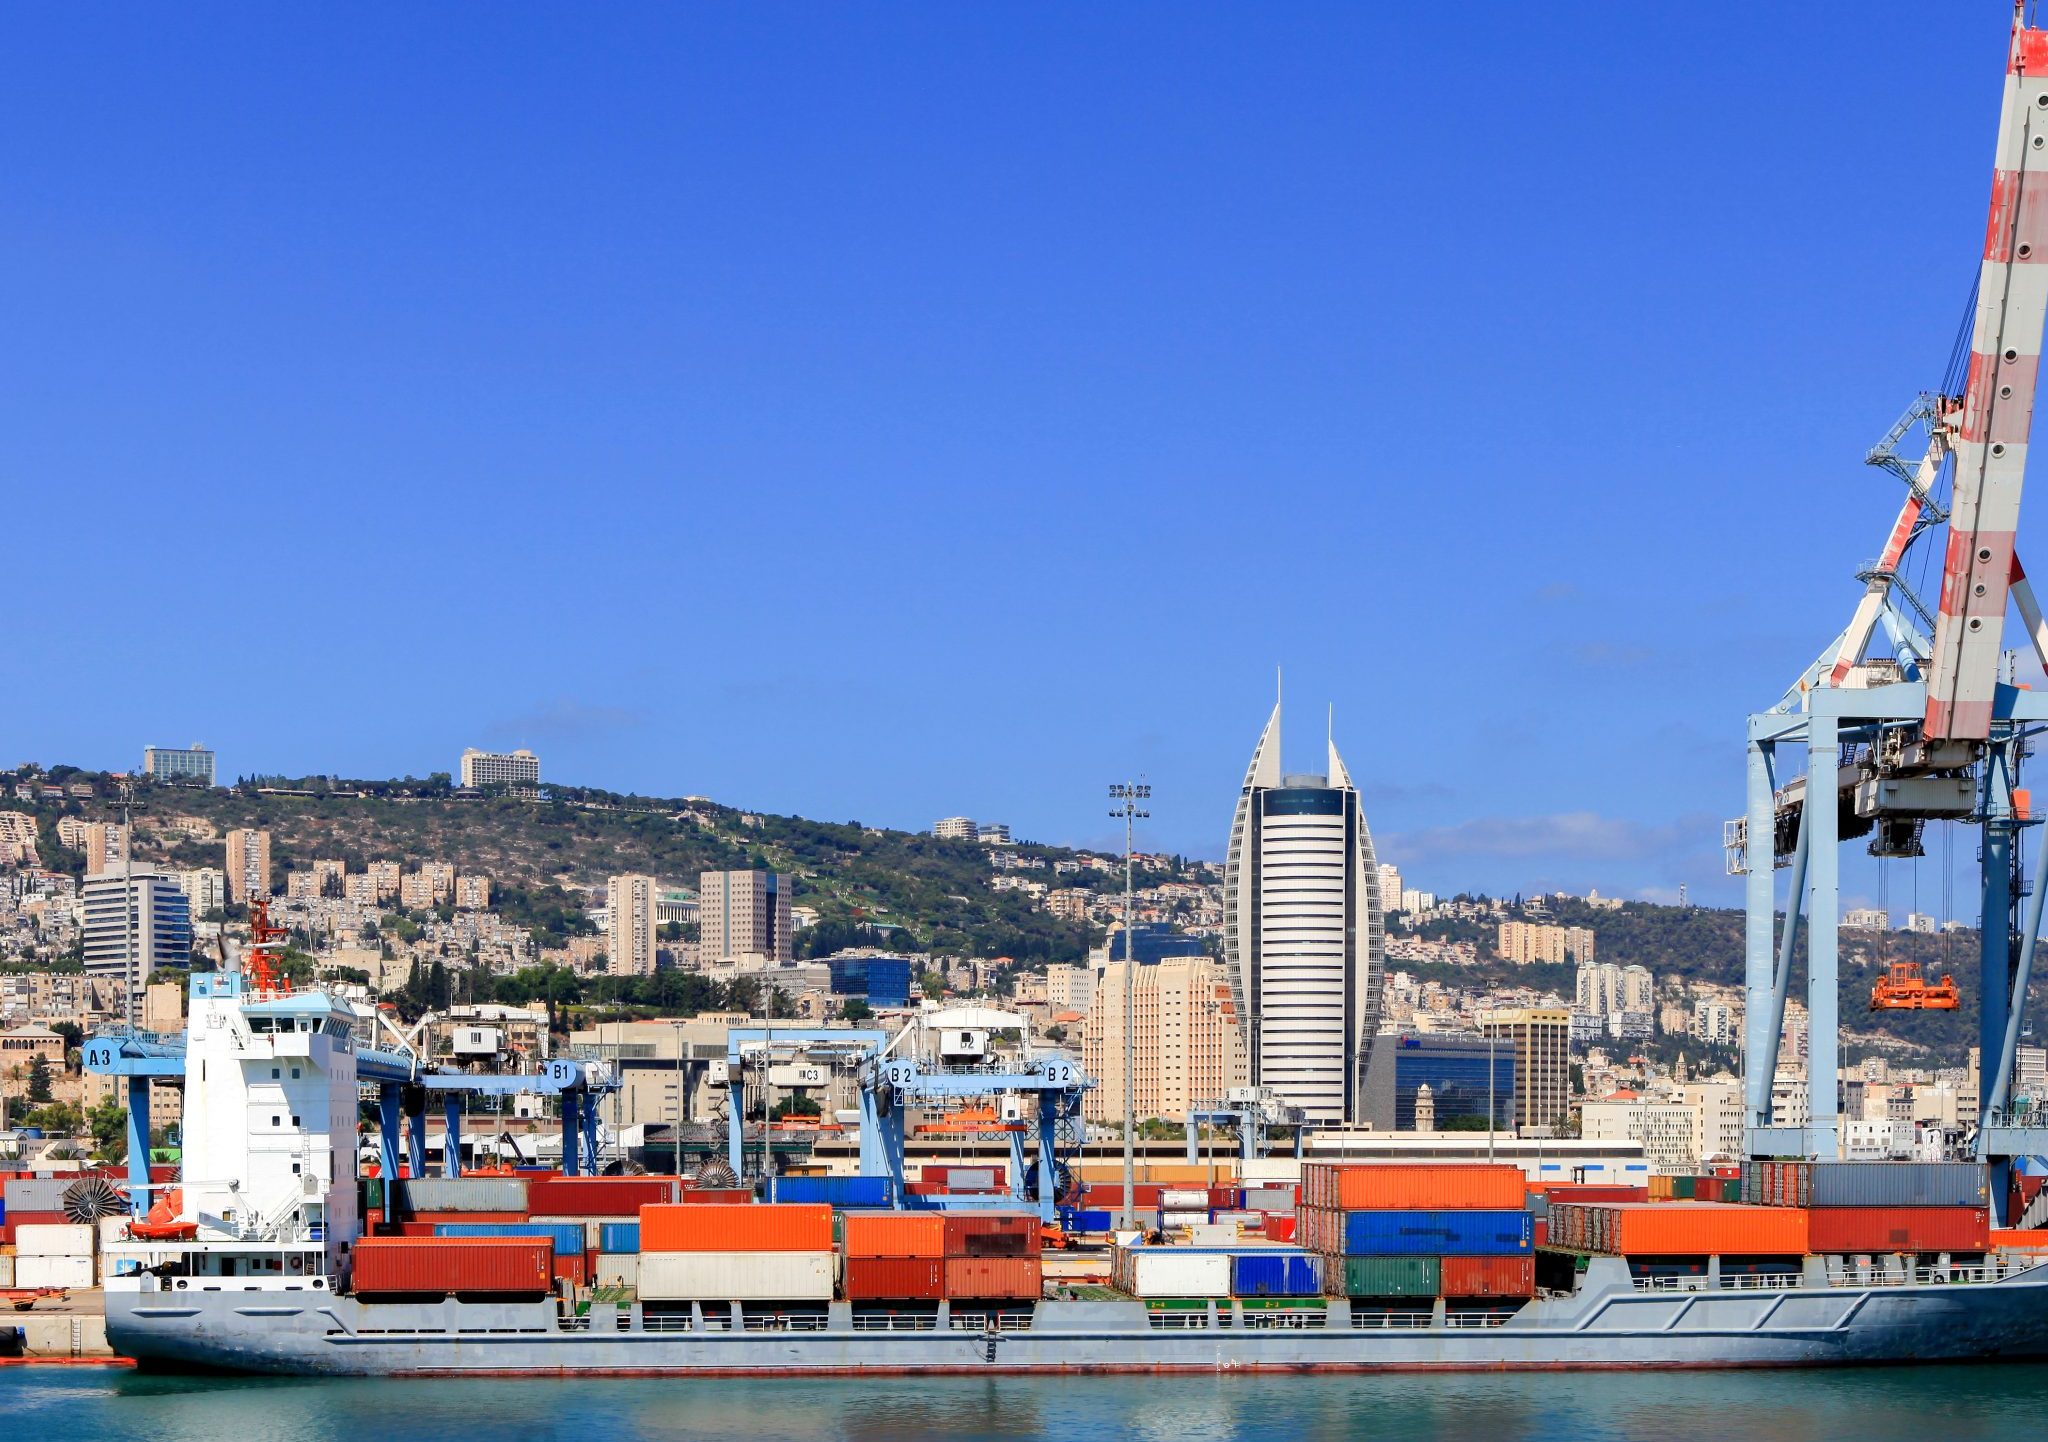 De haven van Haifa in Israël.